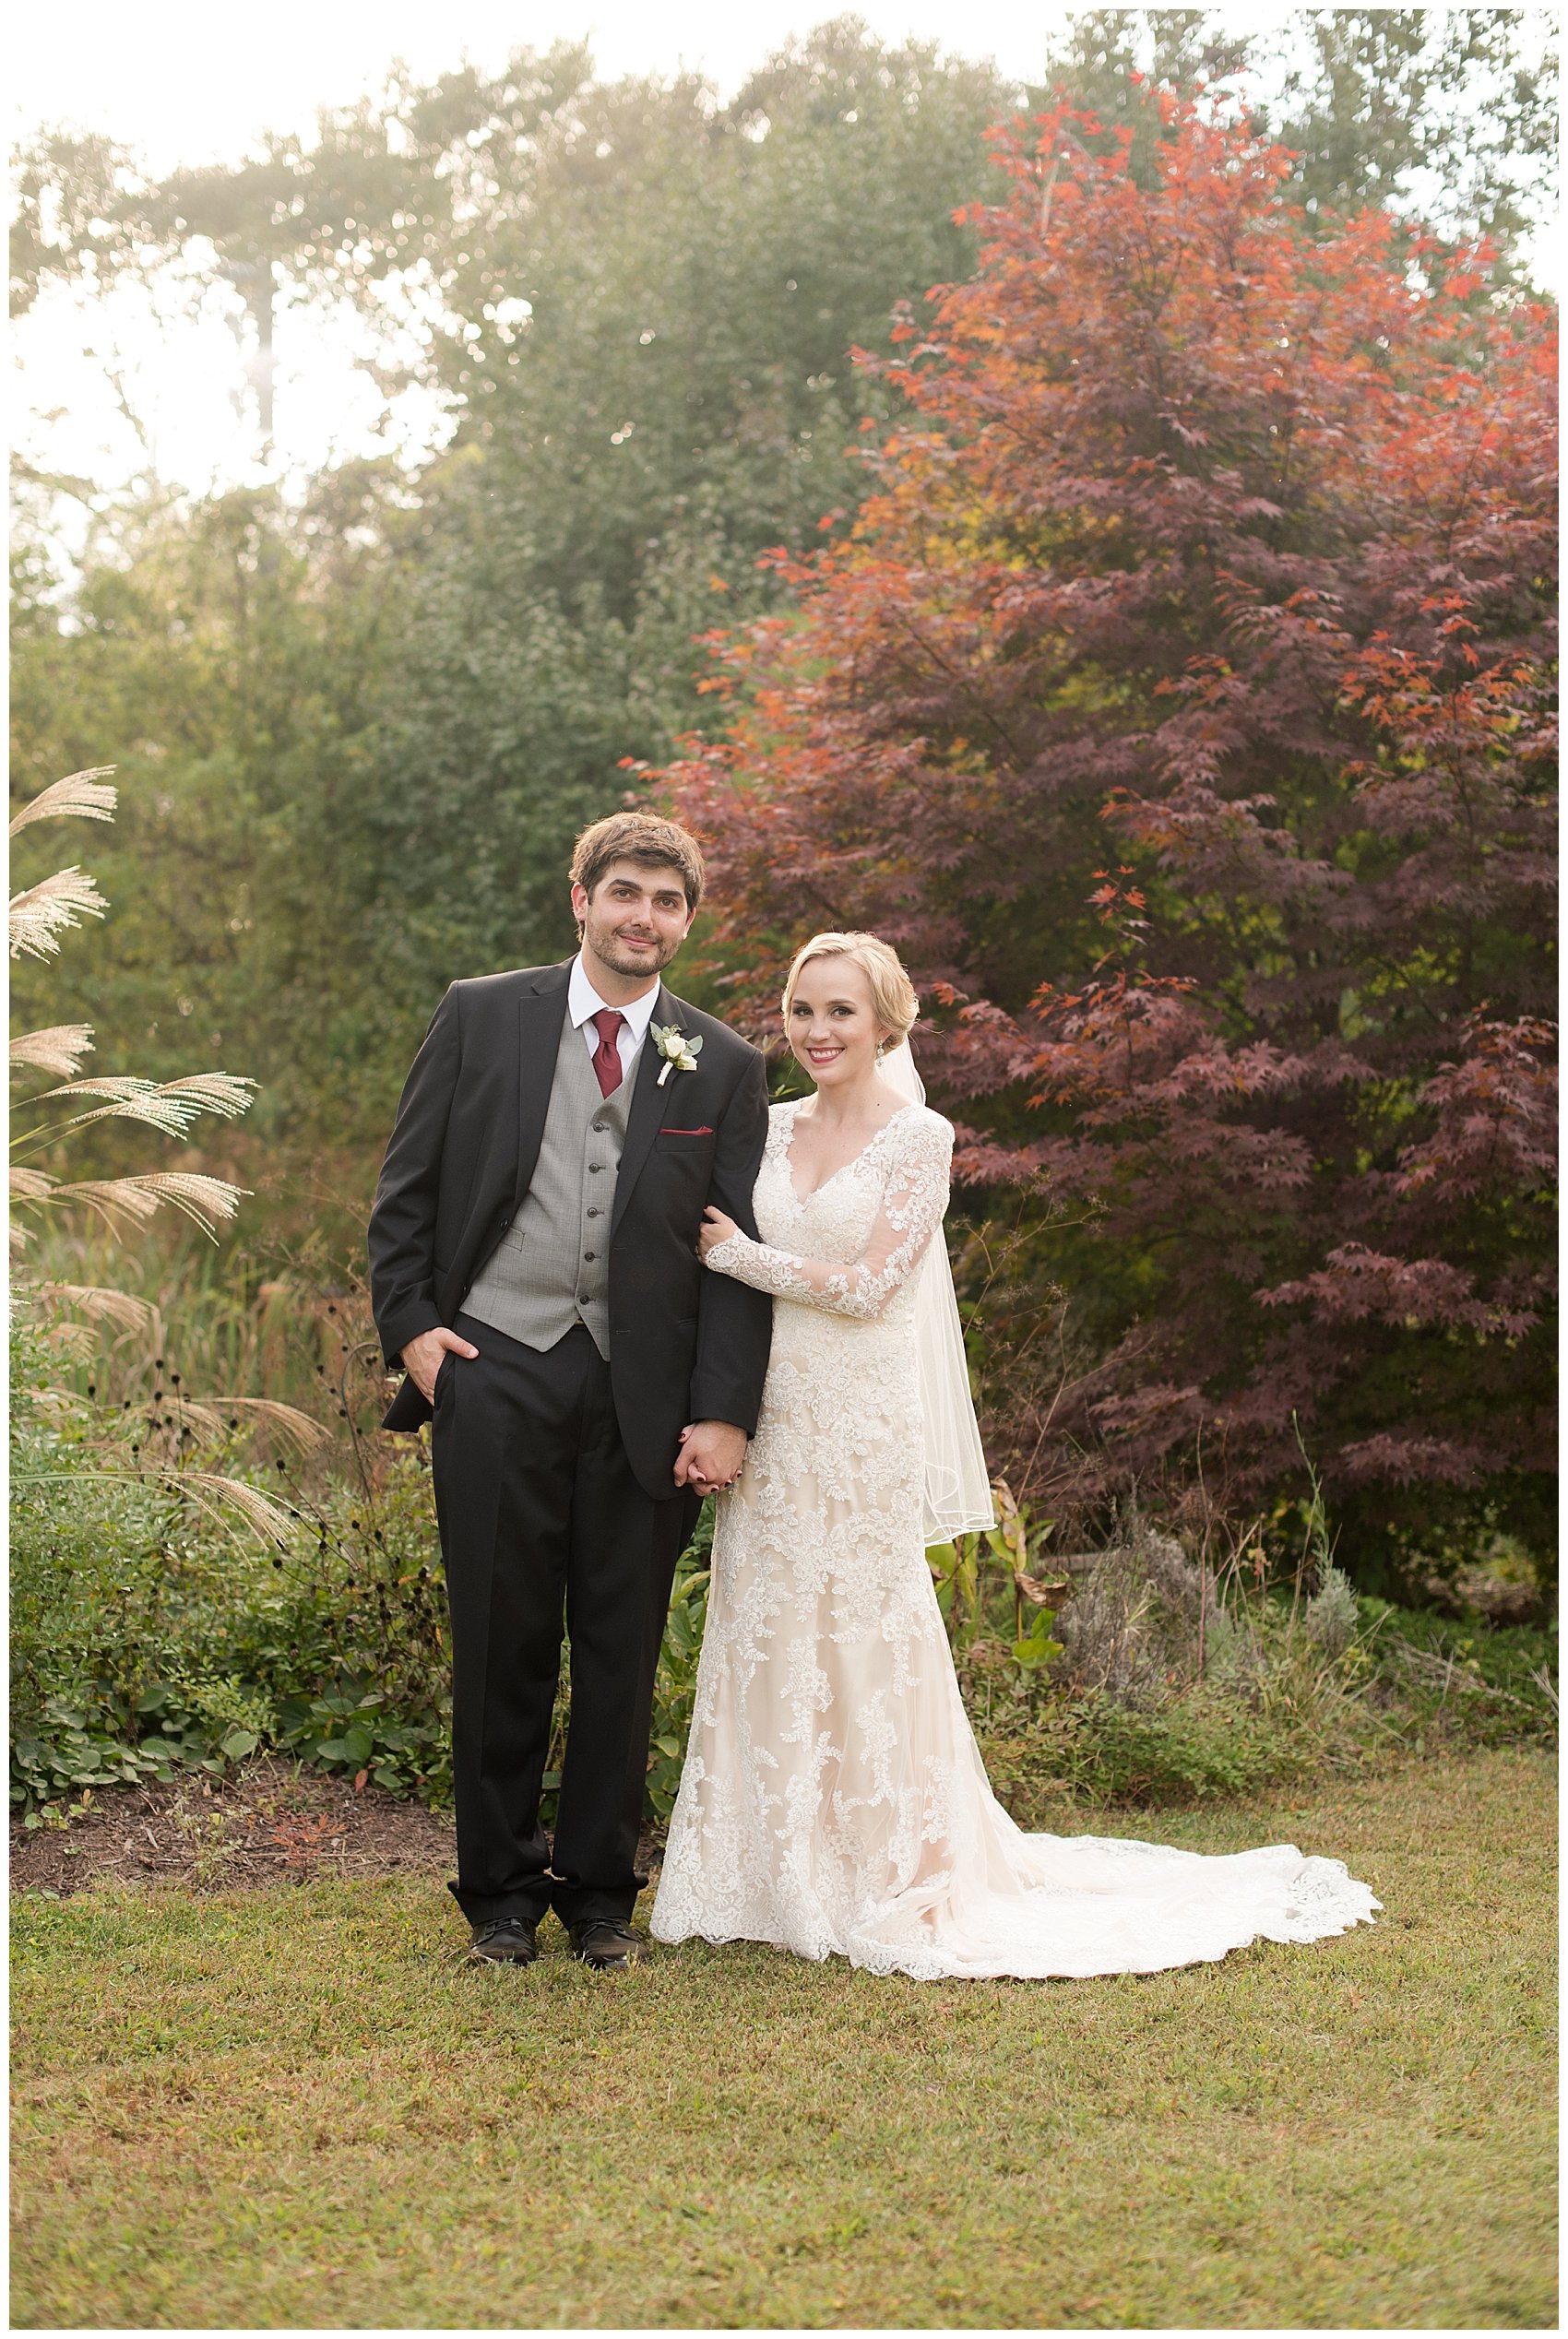 Red Wine Moss Gre
en Fall Autumn Wedding Historic Jasmine Plantation Providence Forge Virginia Wedding Photographers_6599